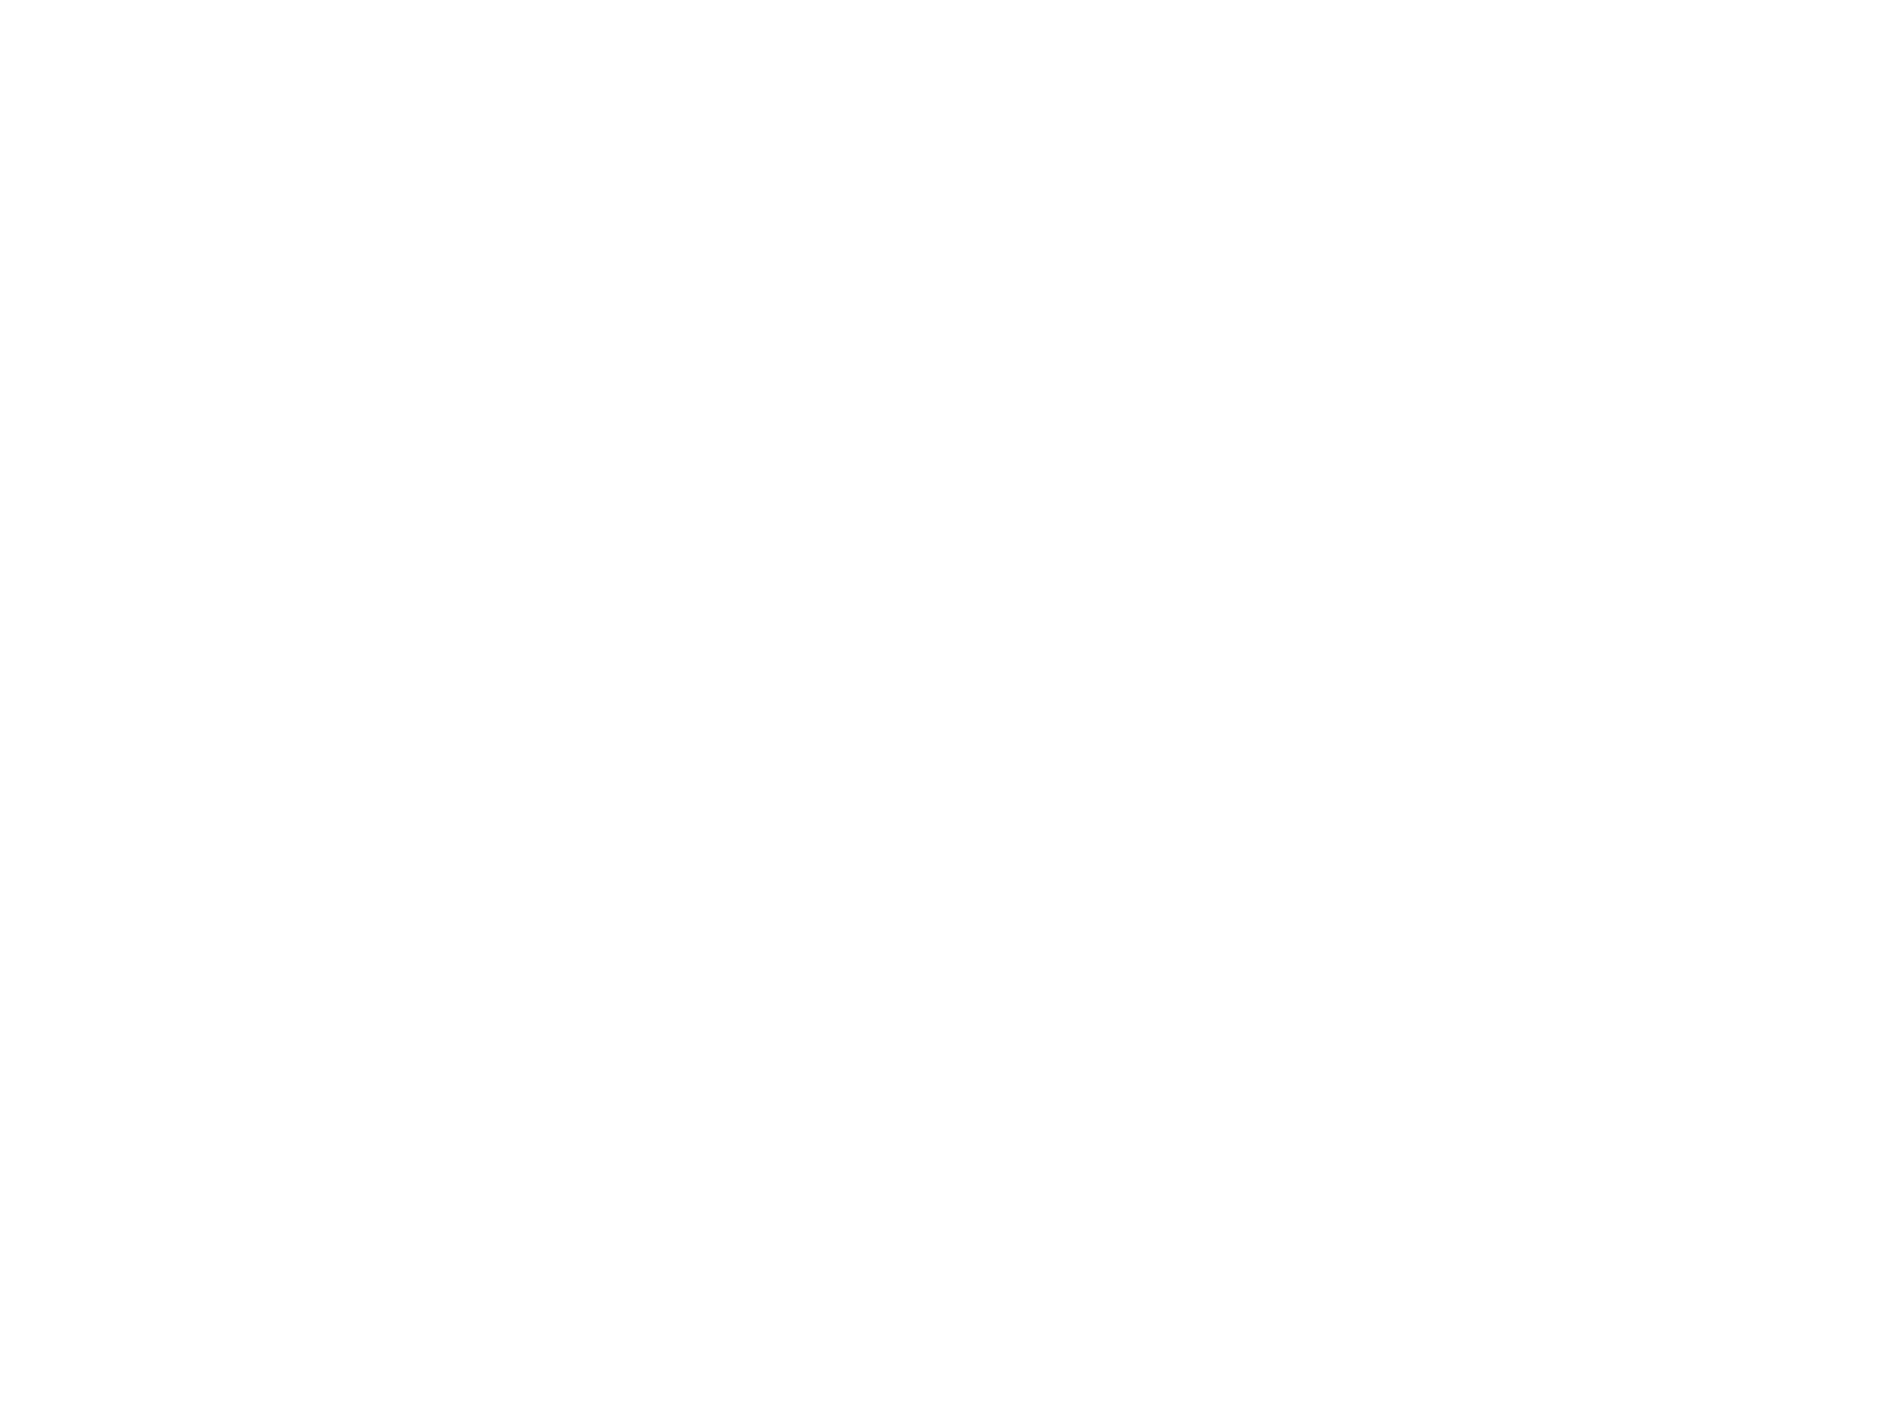 Persephone's Panopticum